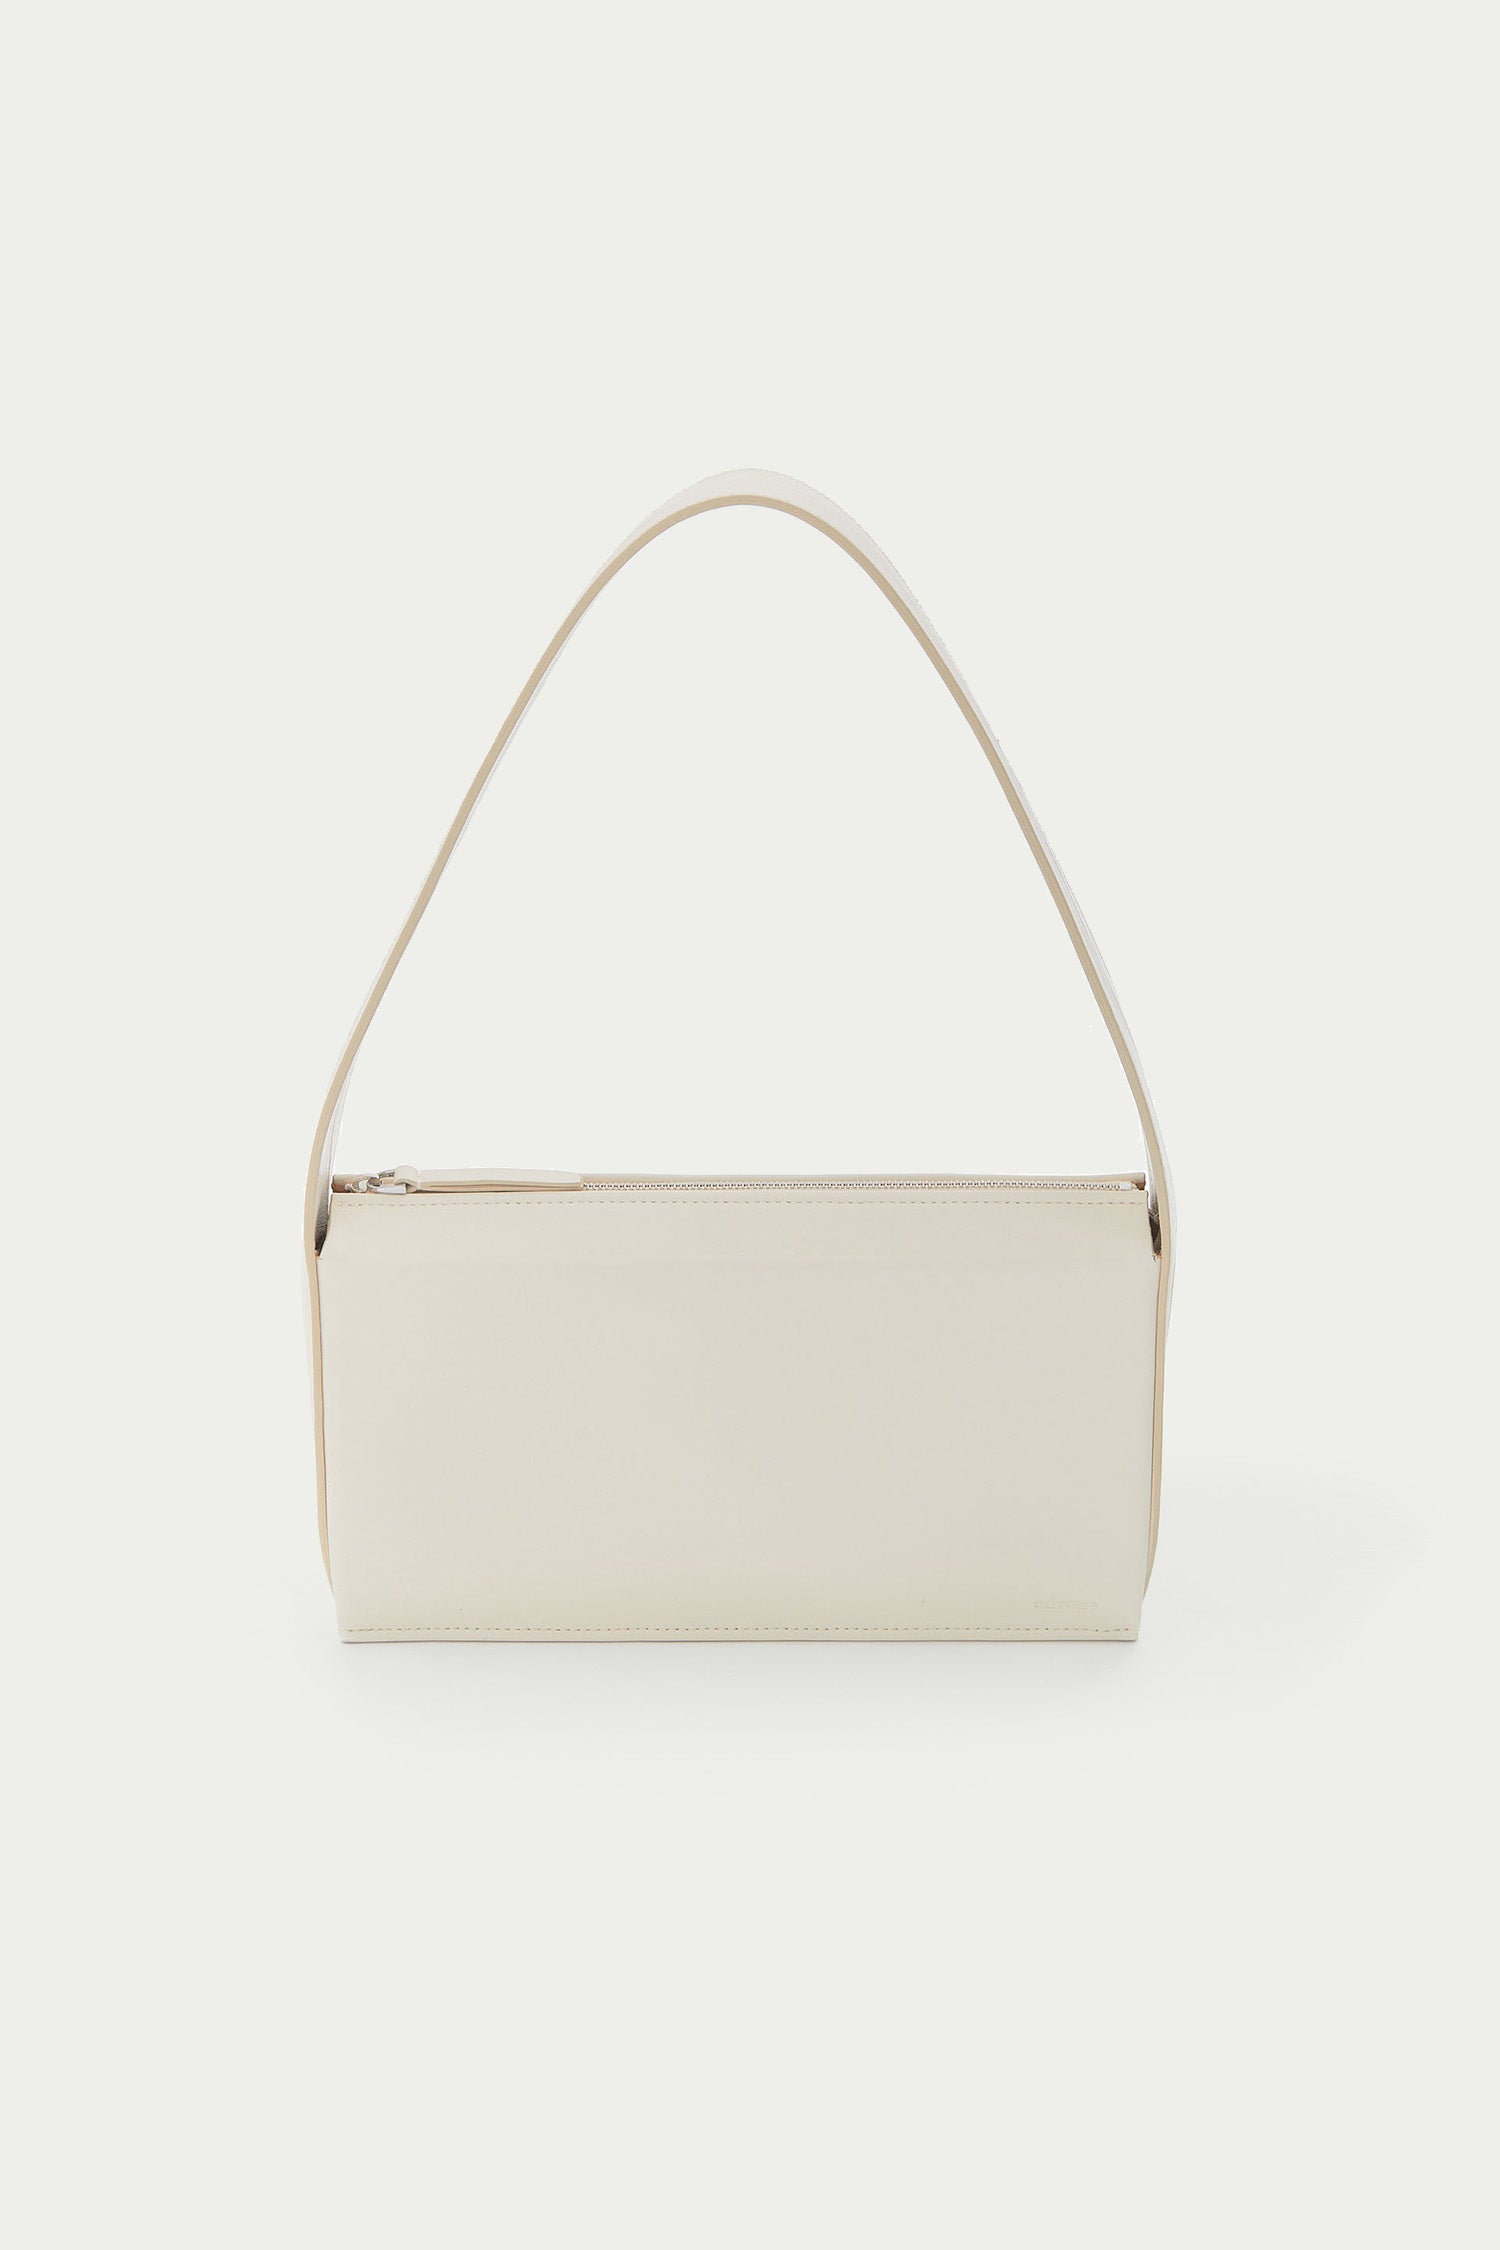 Buy B.B Bag Shop Women's Handbags (BB-9405-Cream, Off-White) at